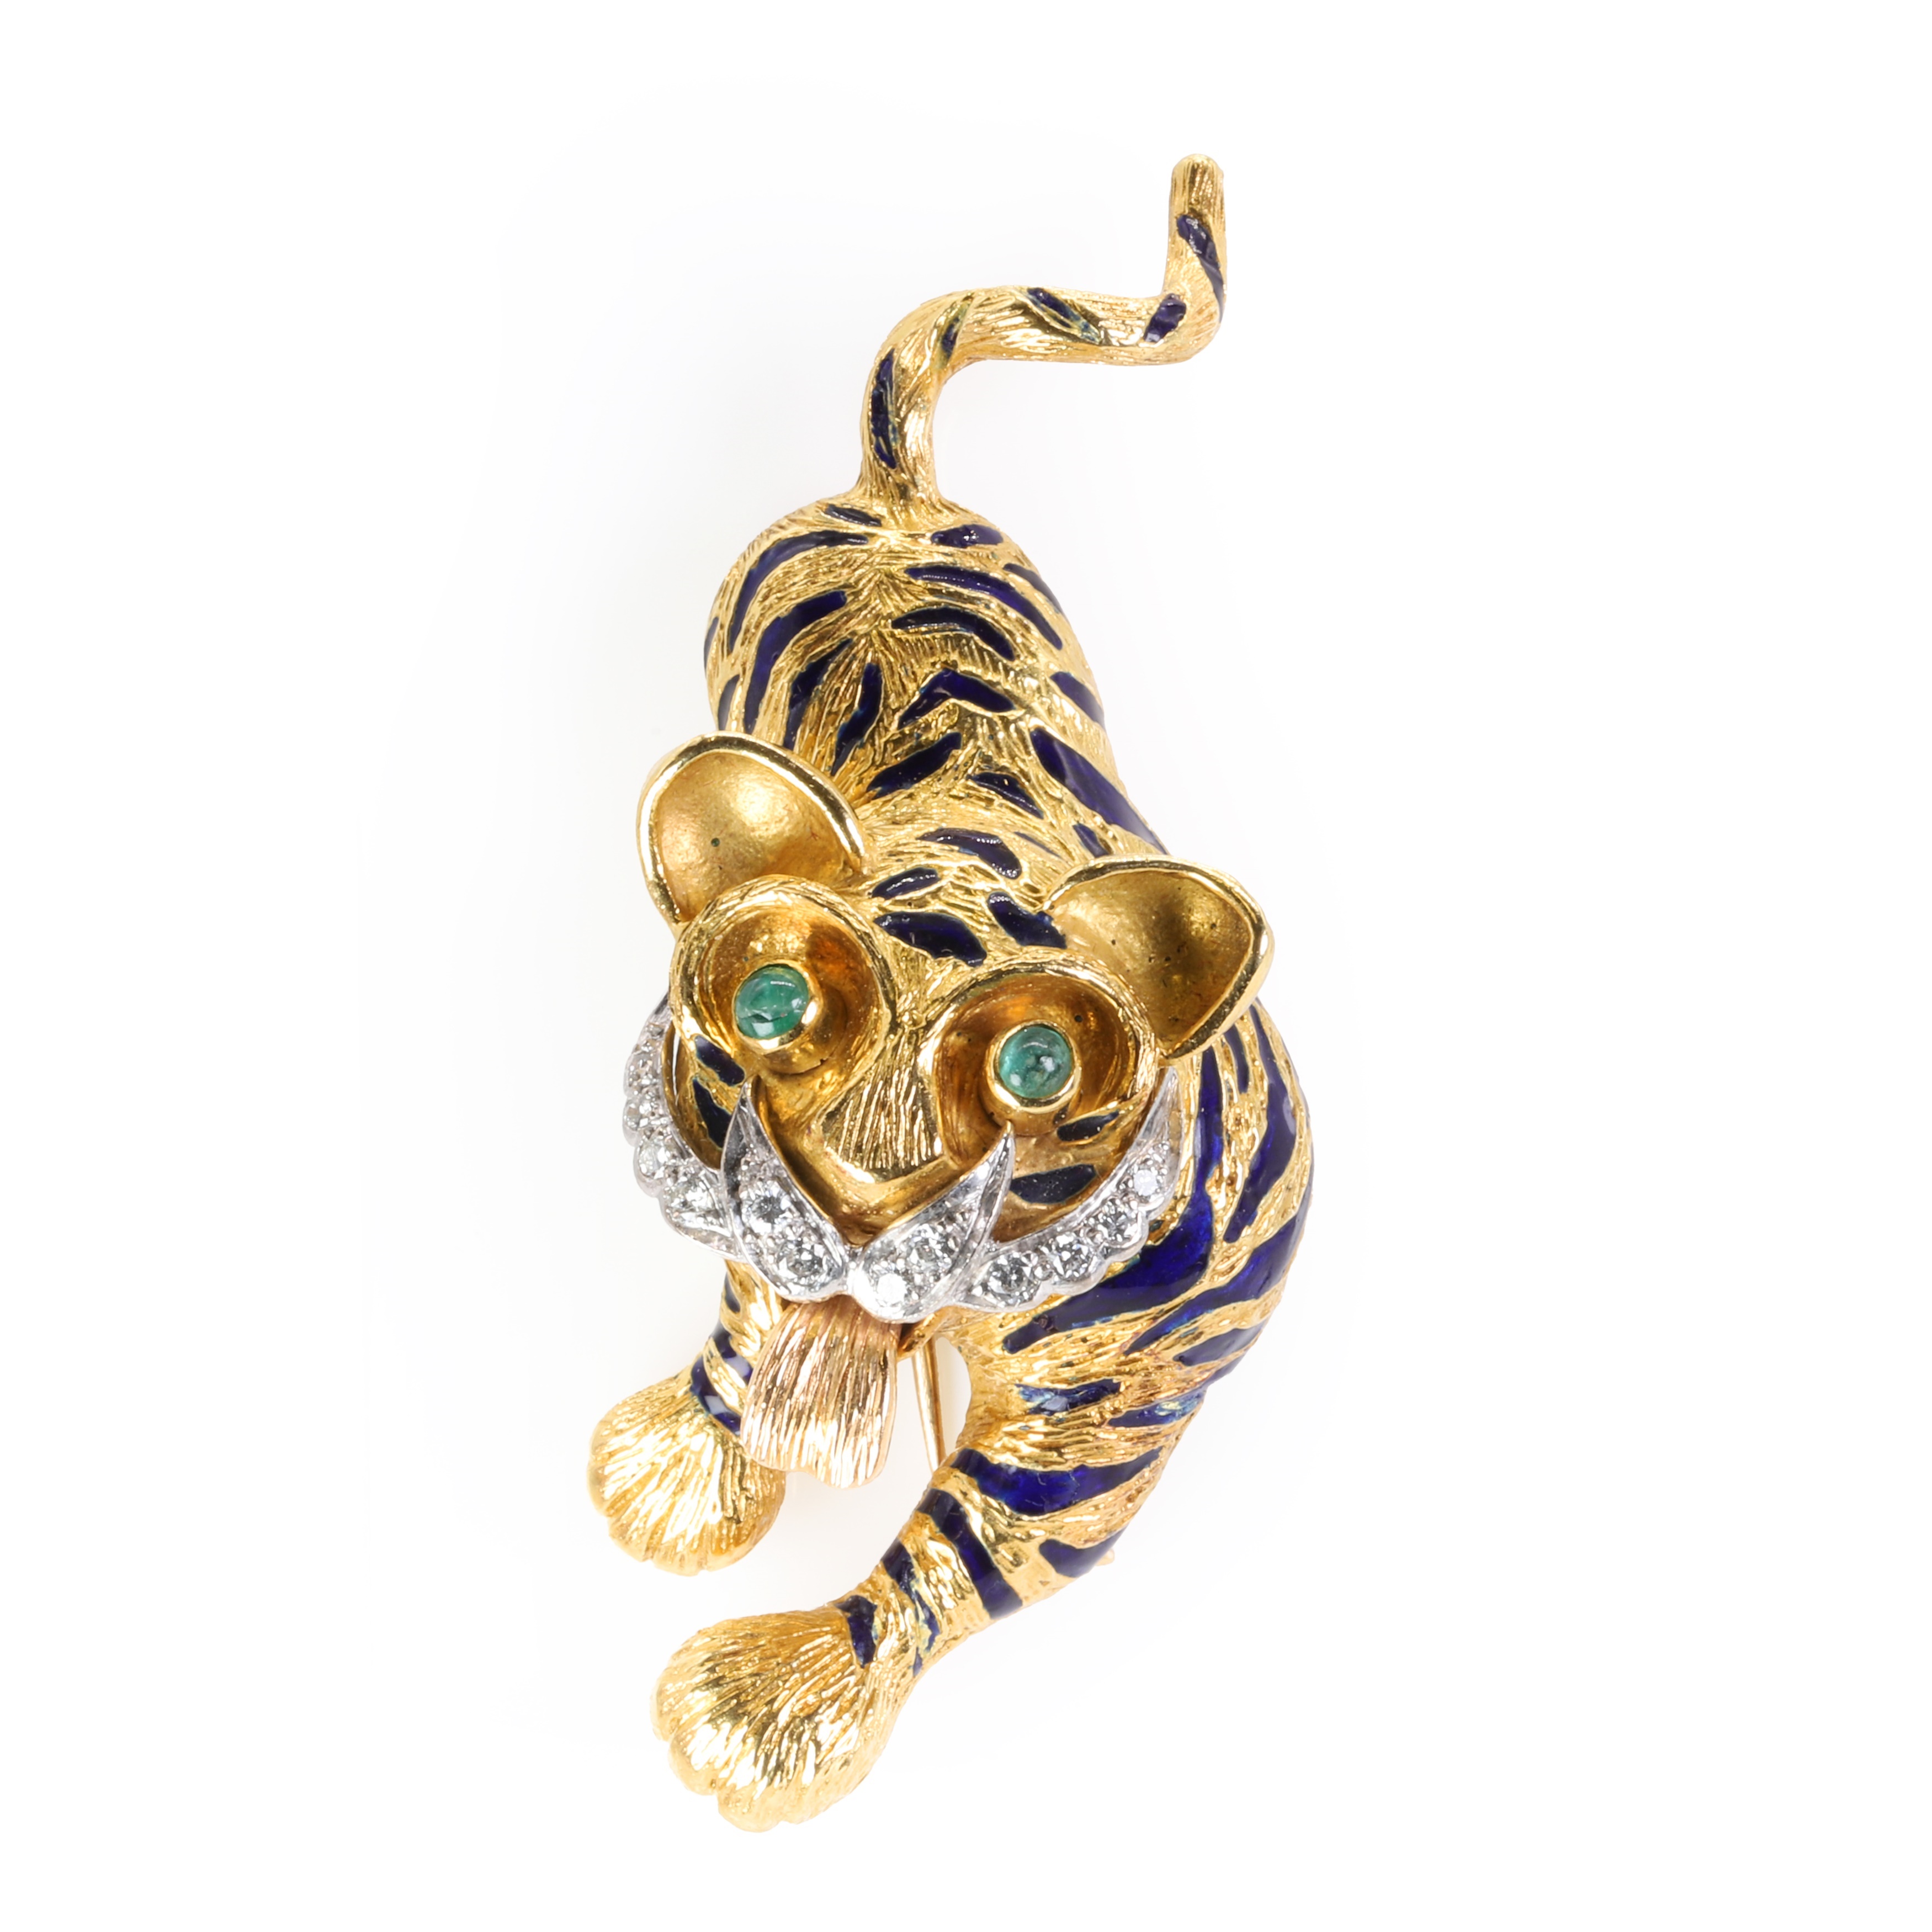 An 18ct gold, enamel and diamond novelty brooch, by Kutchinsky (£1,500-2,000)